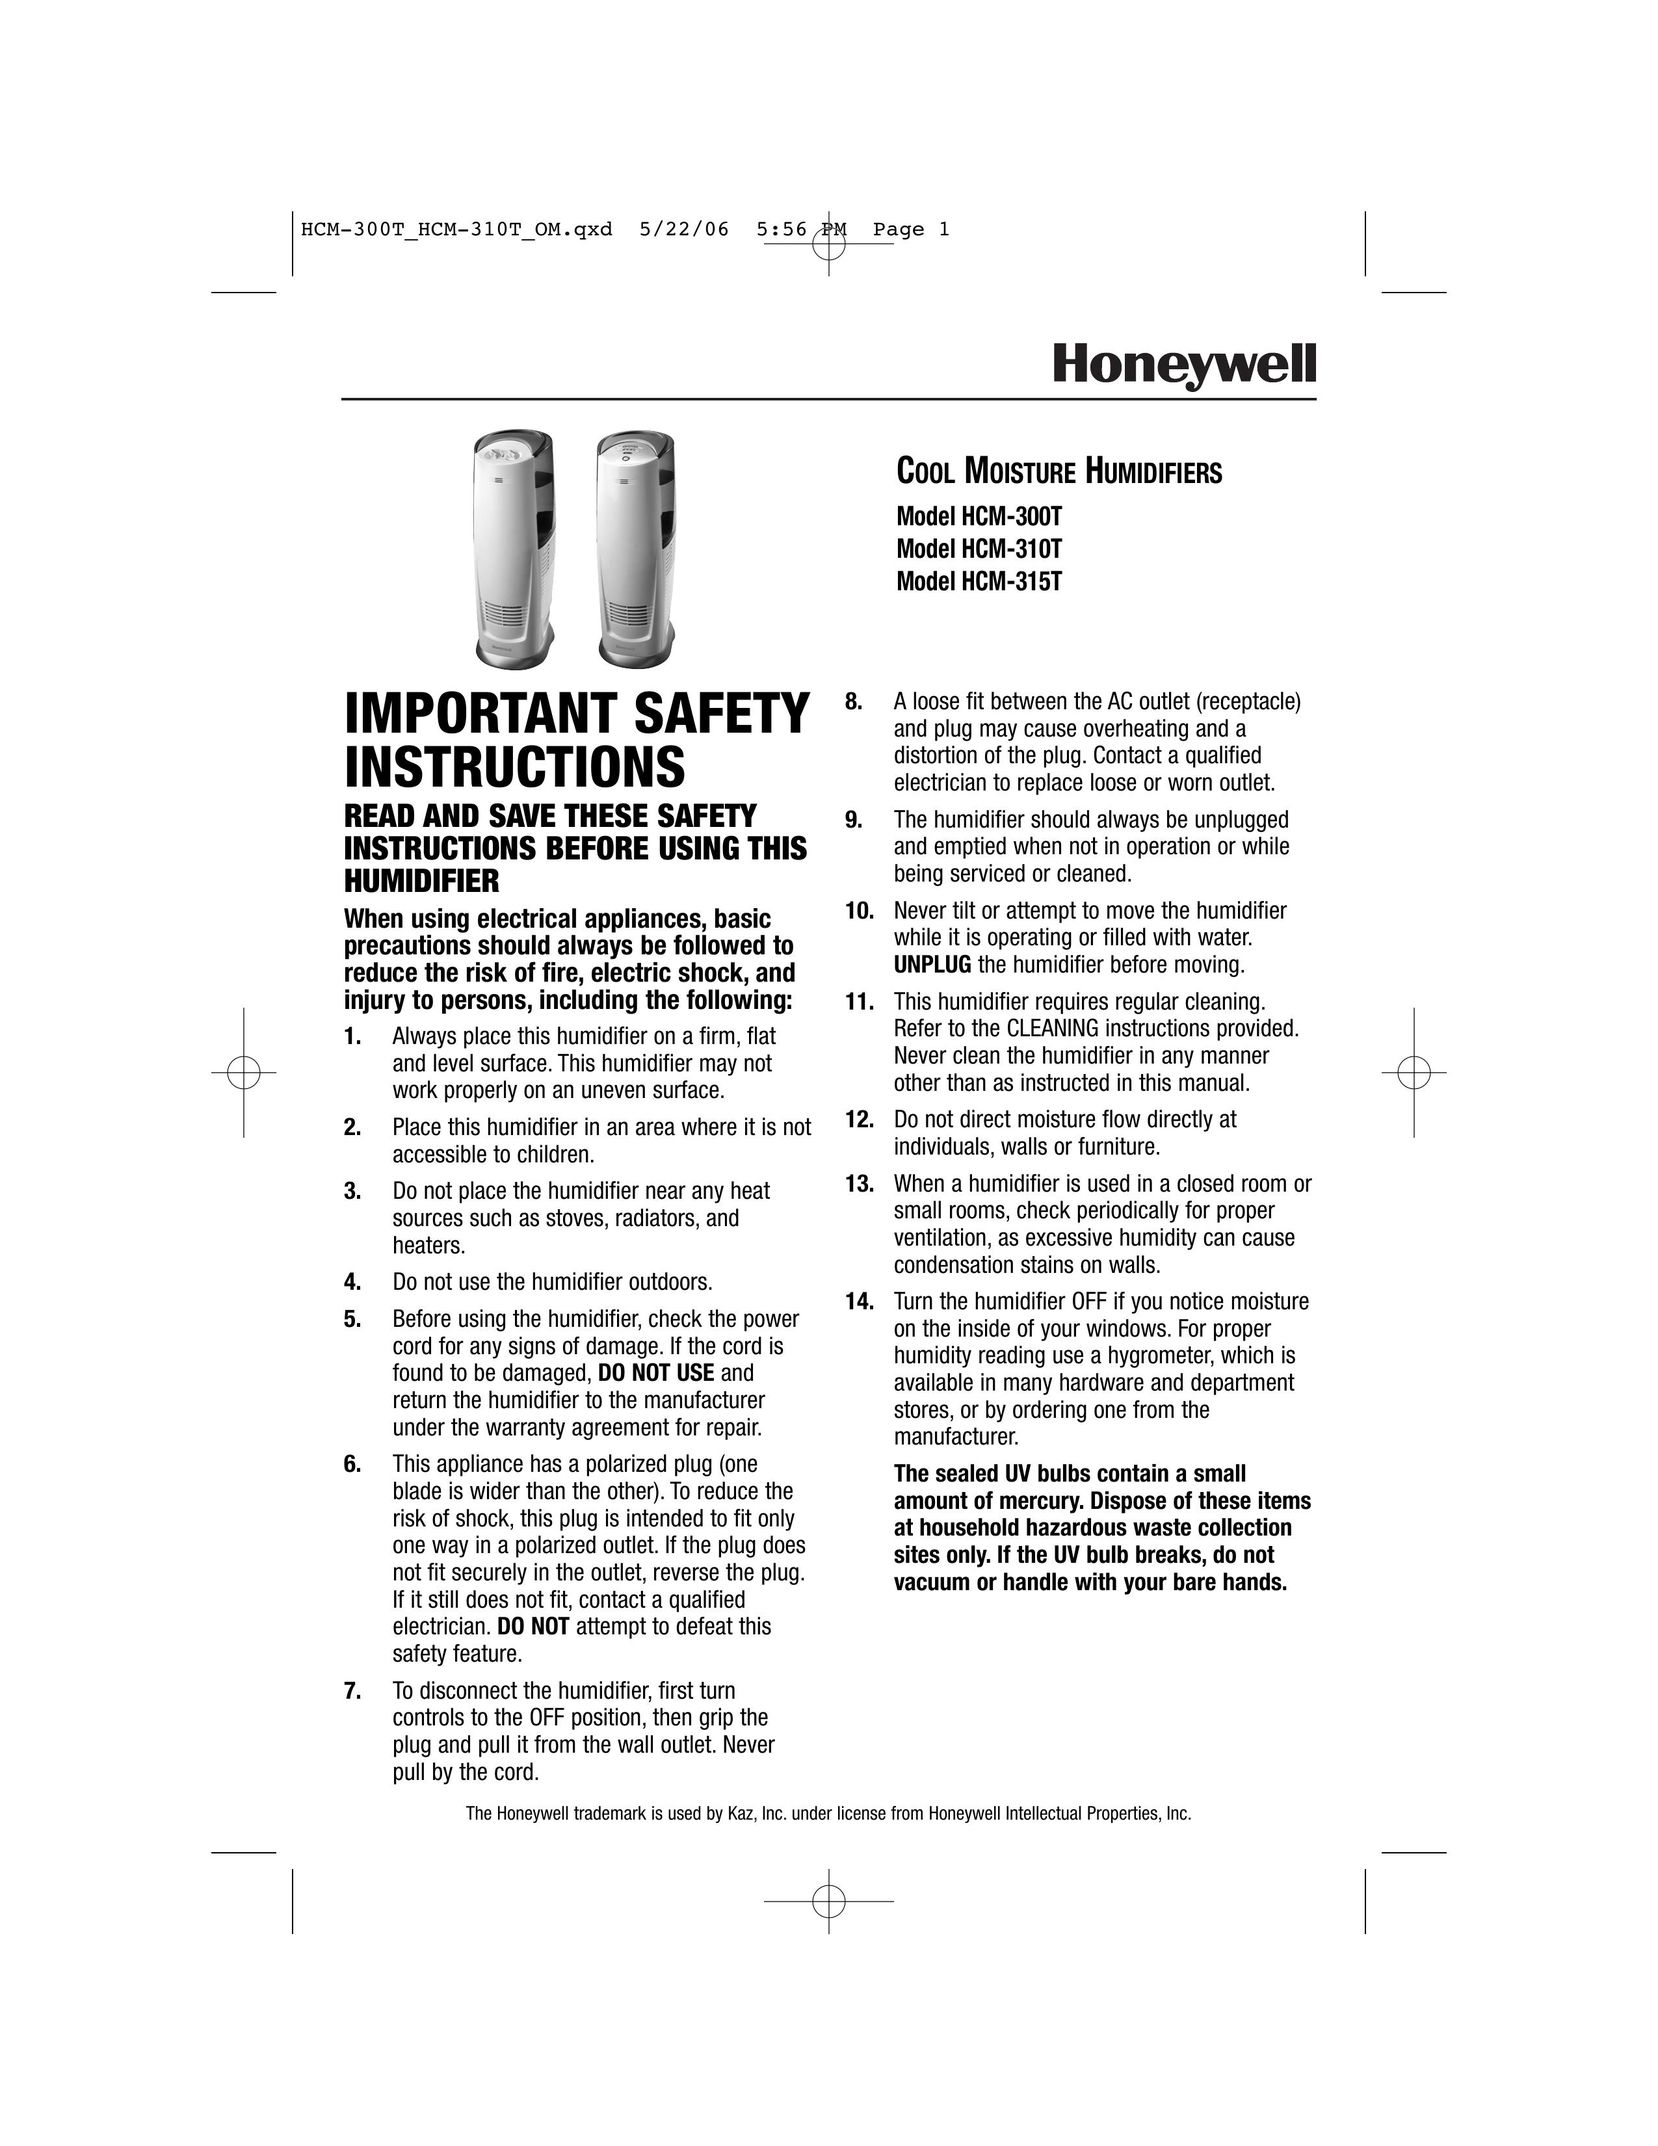 Honeywell HCM-310T Humidifier User Manual